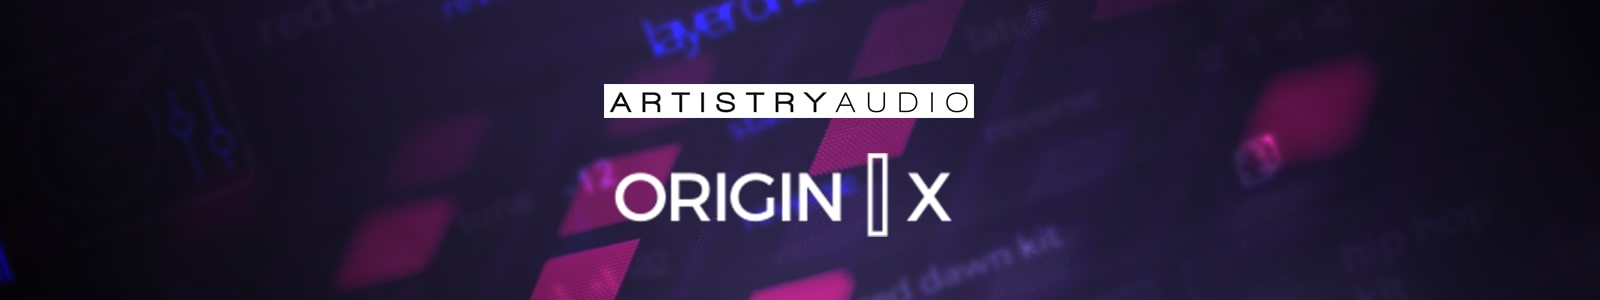 Artistry Audio ORIGIN X